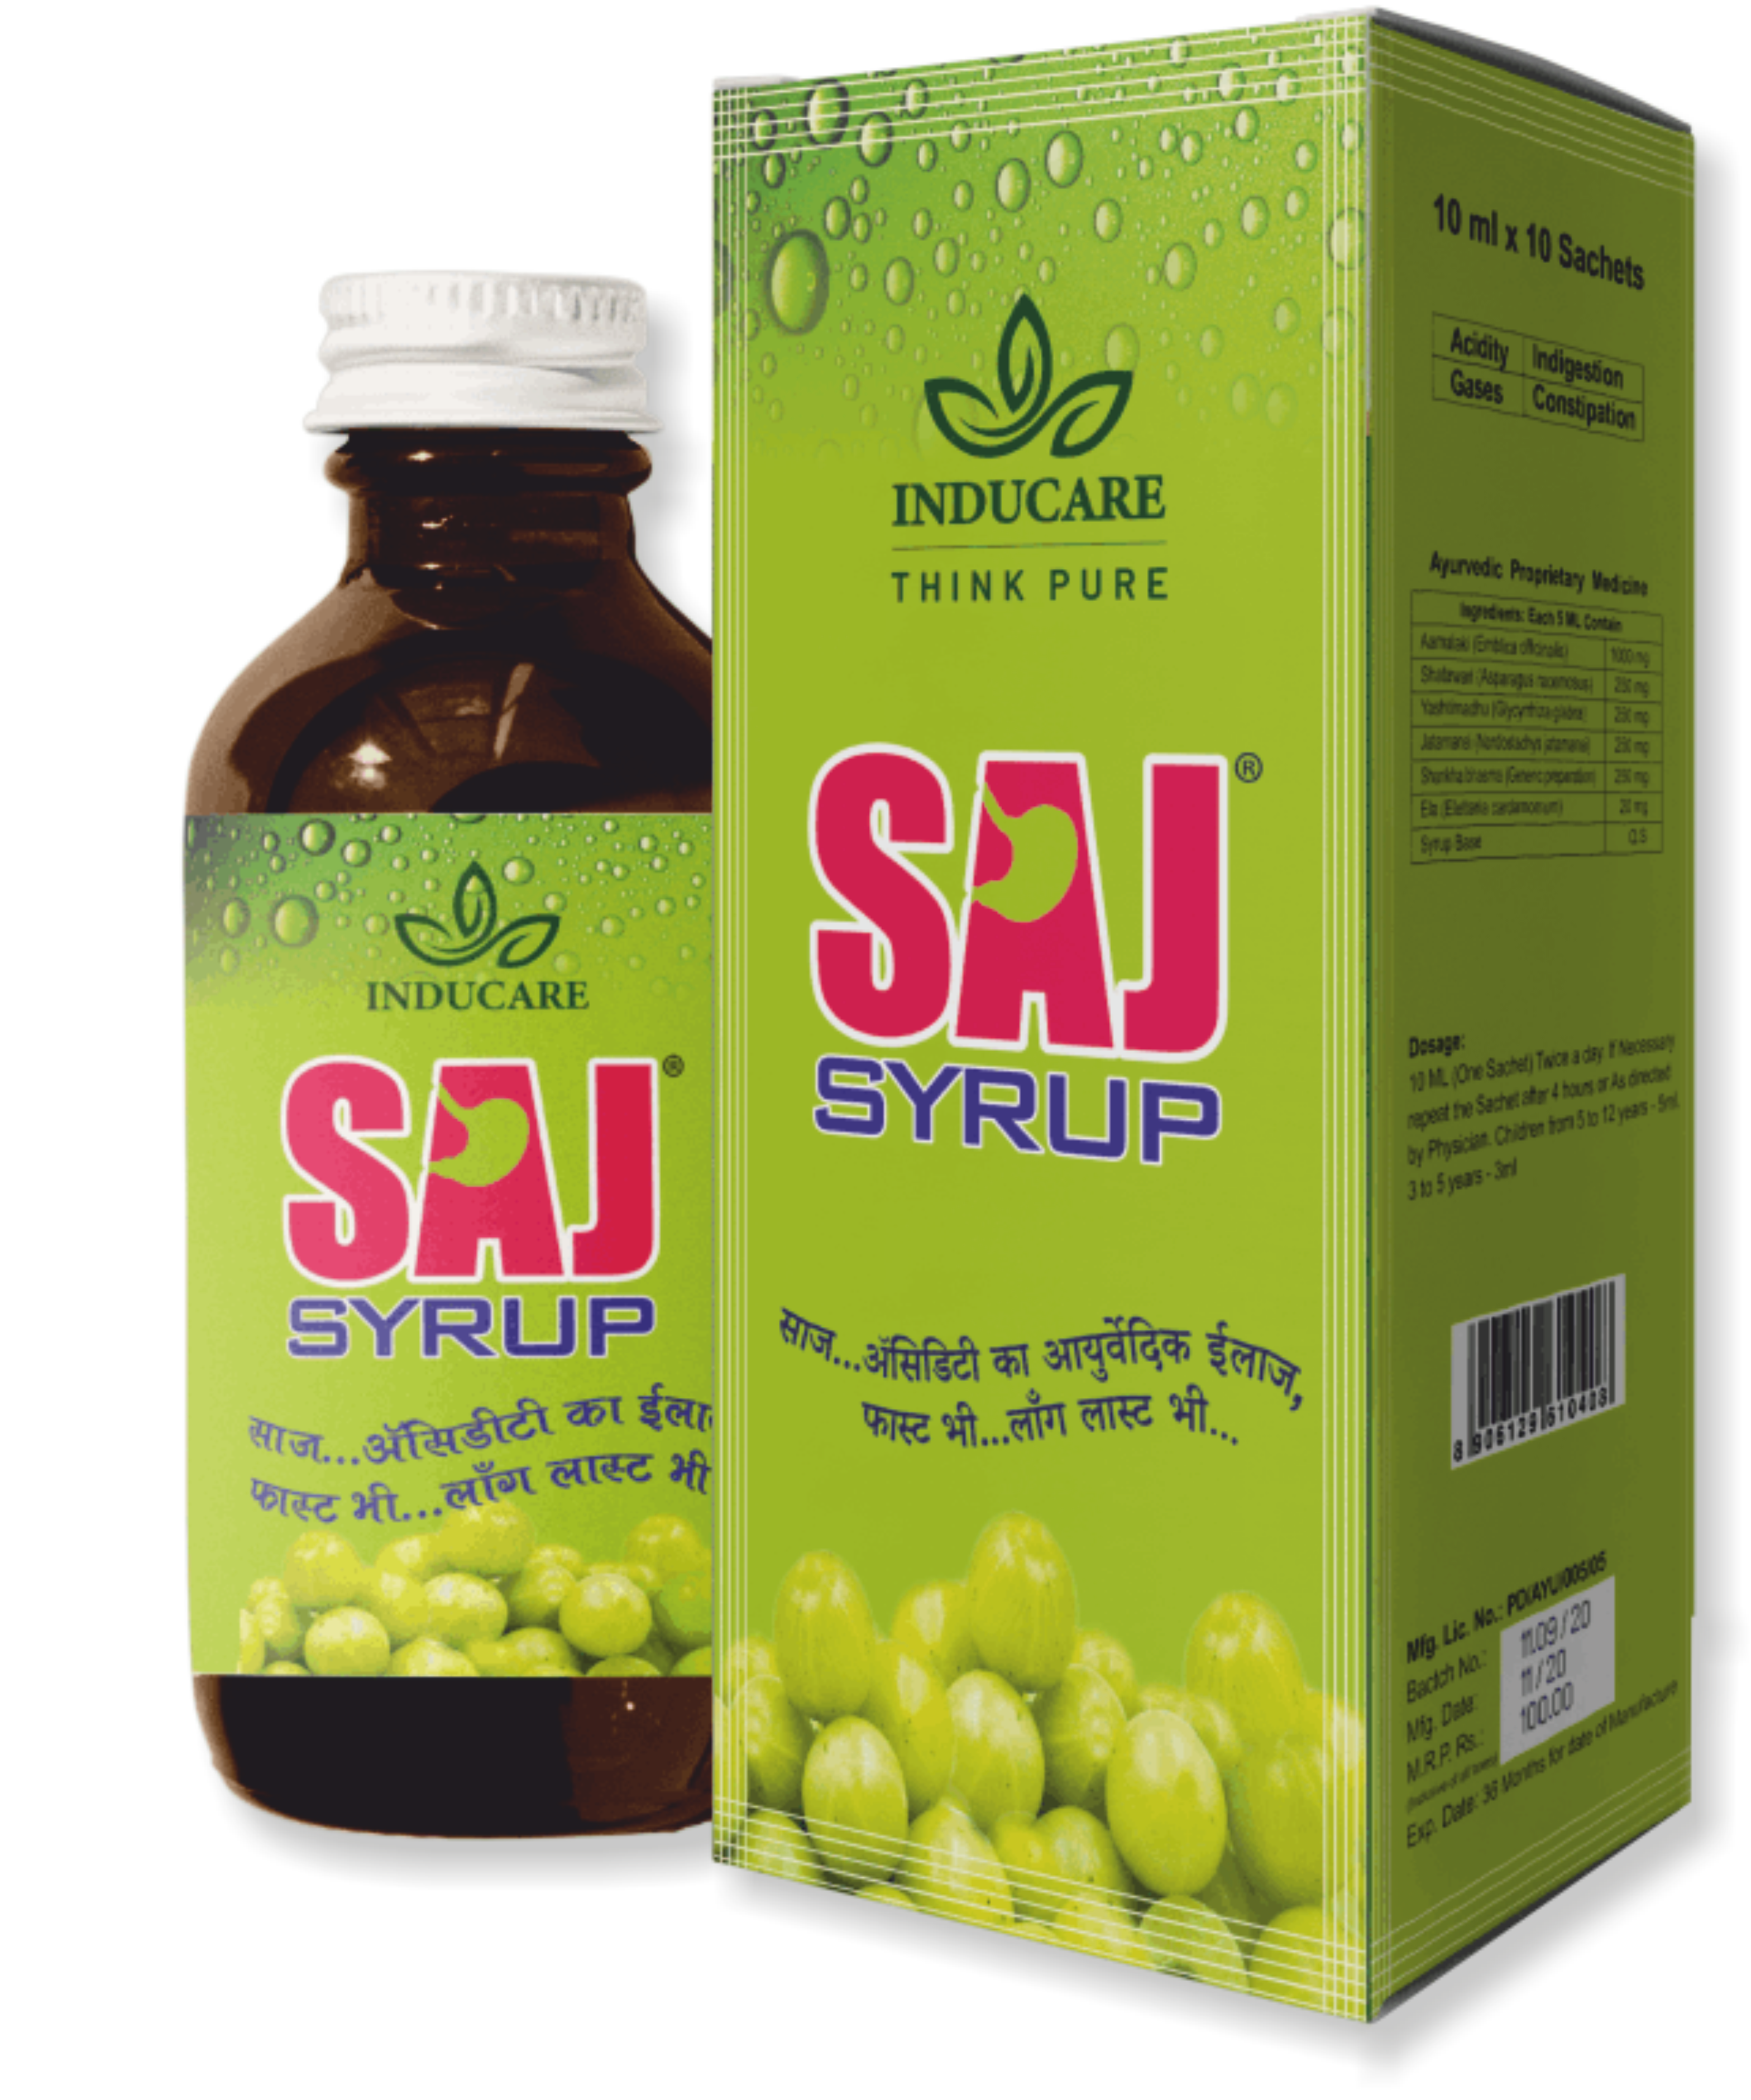 Buy Inducare Pharma Saj Syrup at Best Price Online